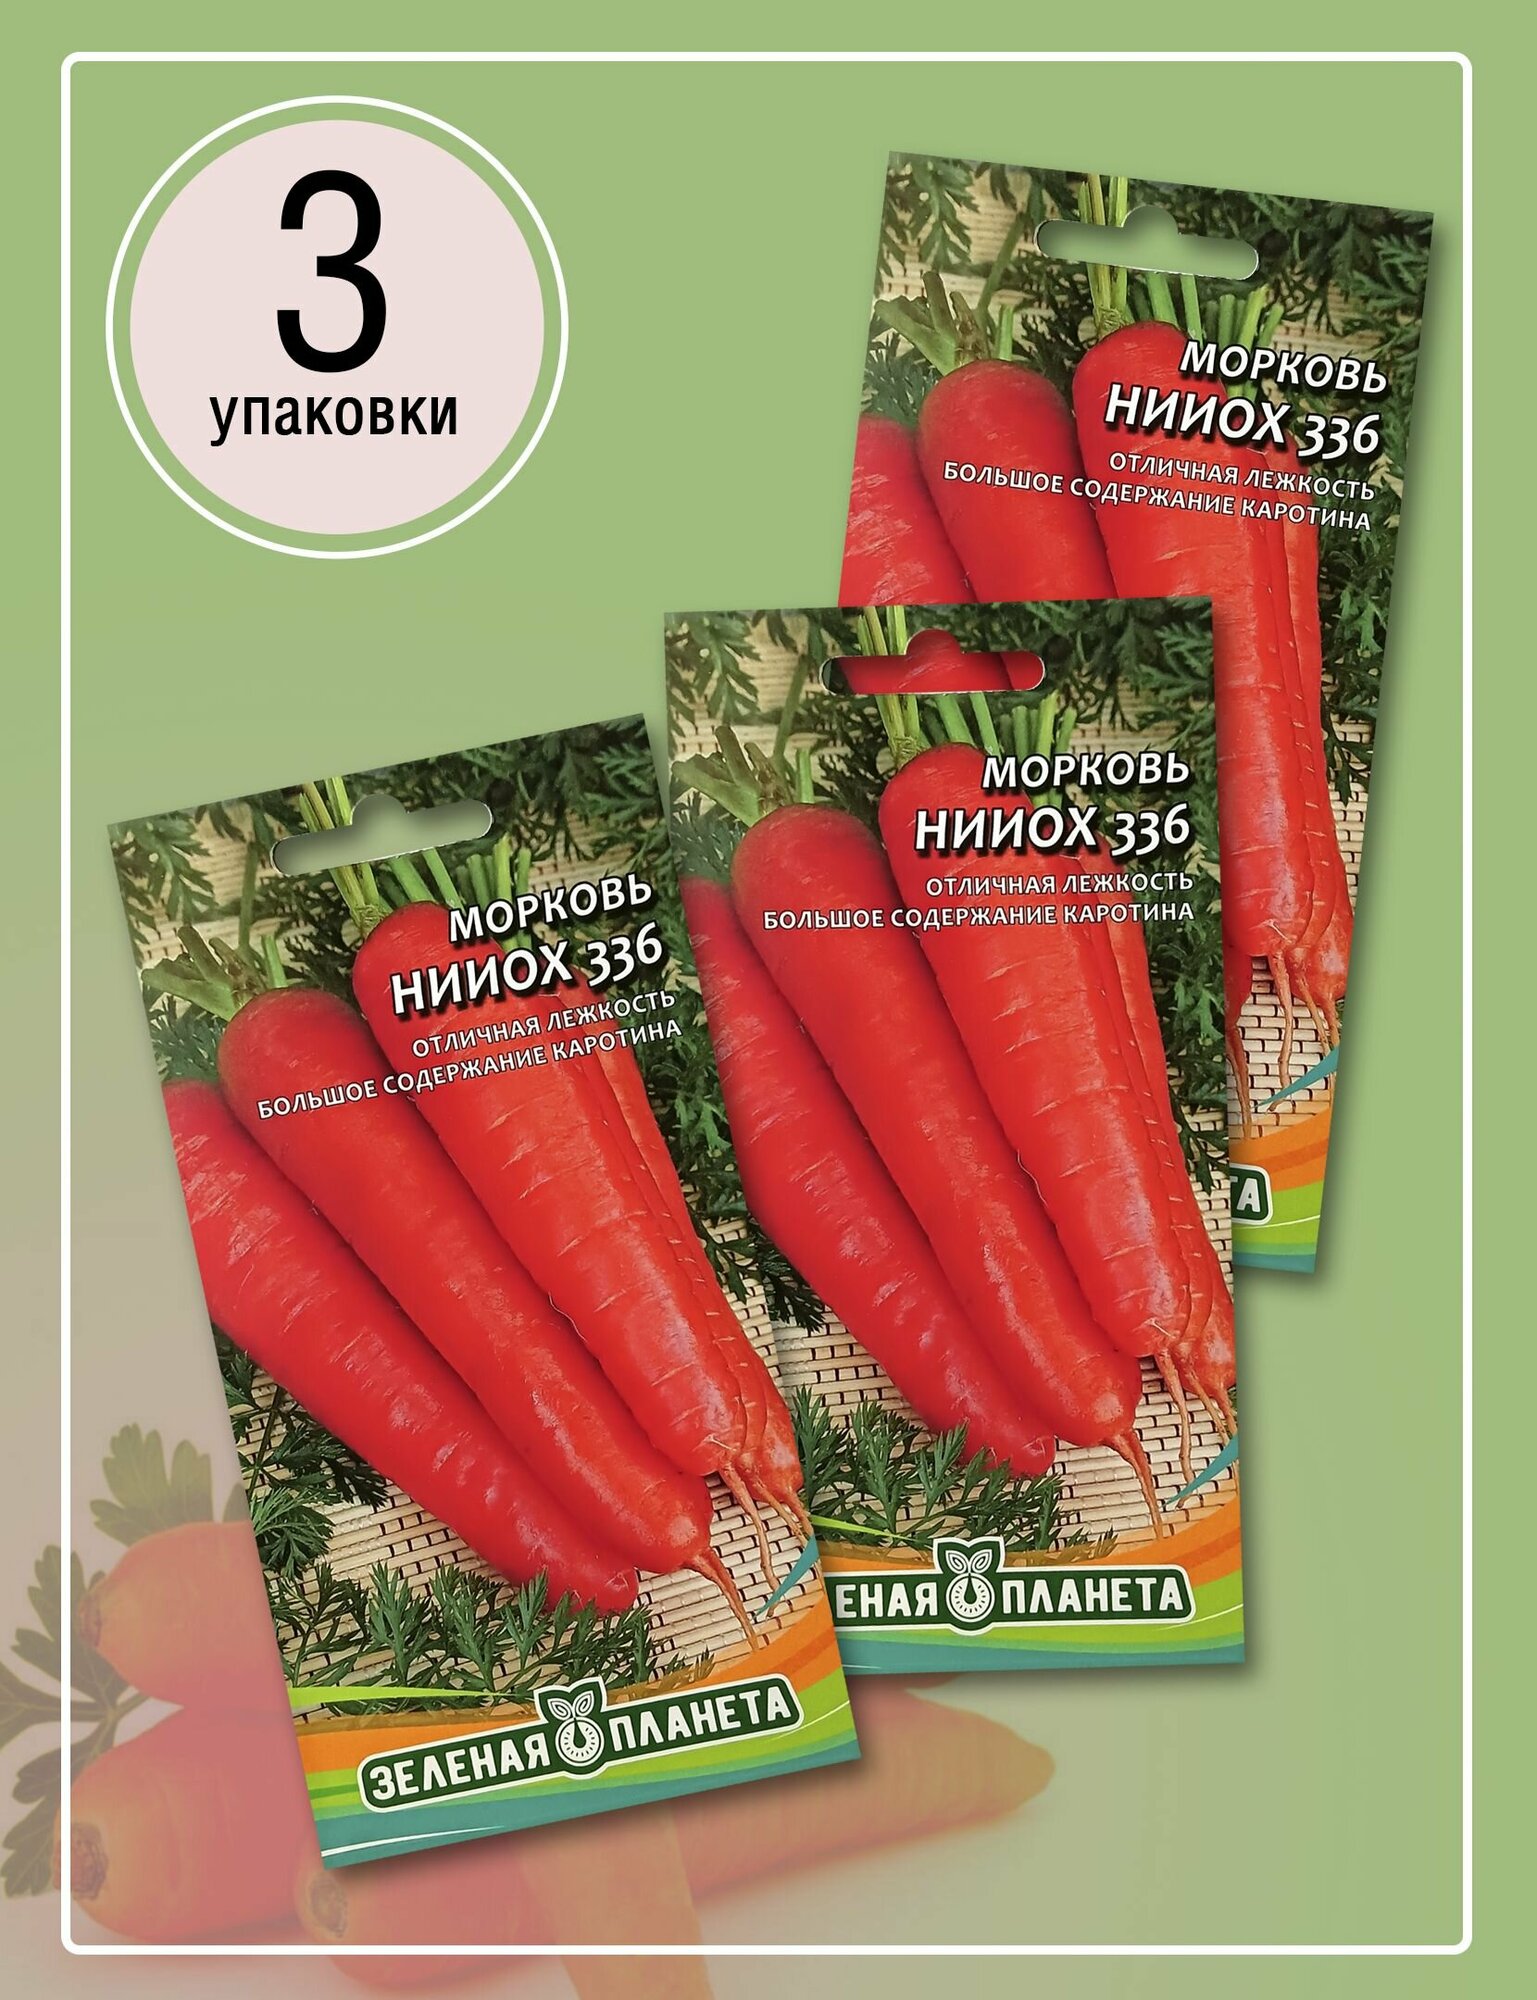 Морковь нииох 336 (5 пакетов по 2гр)